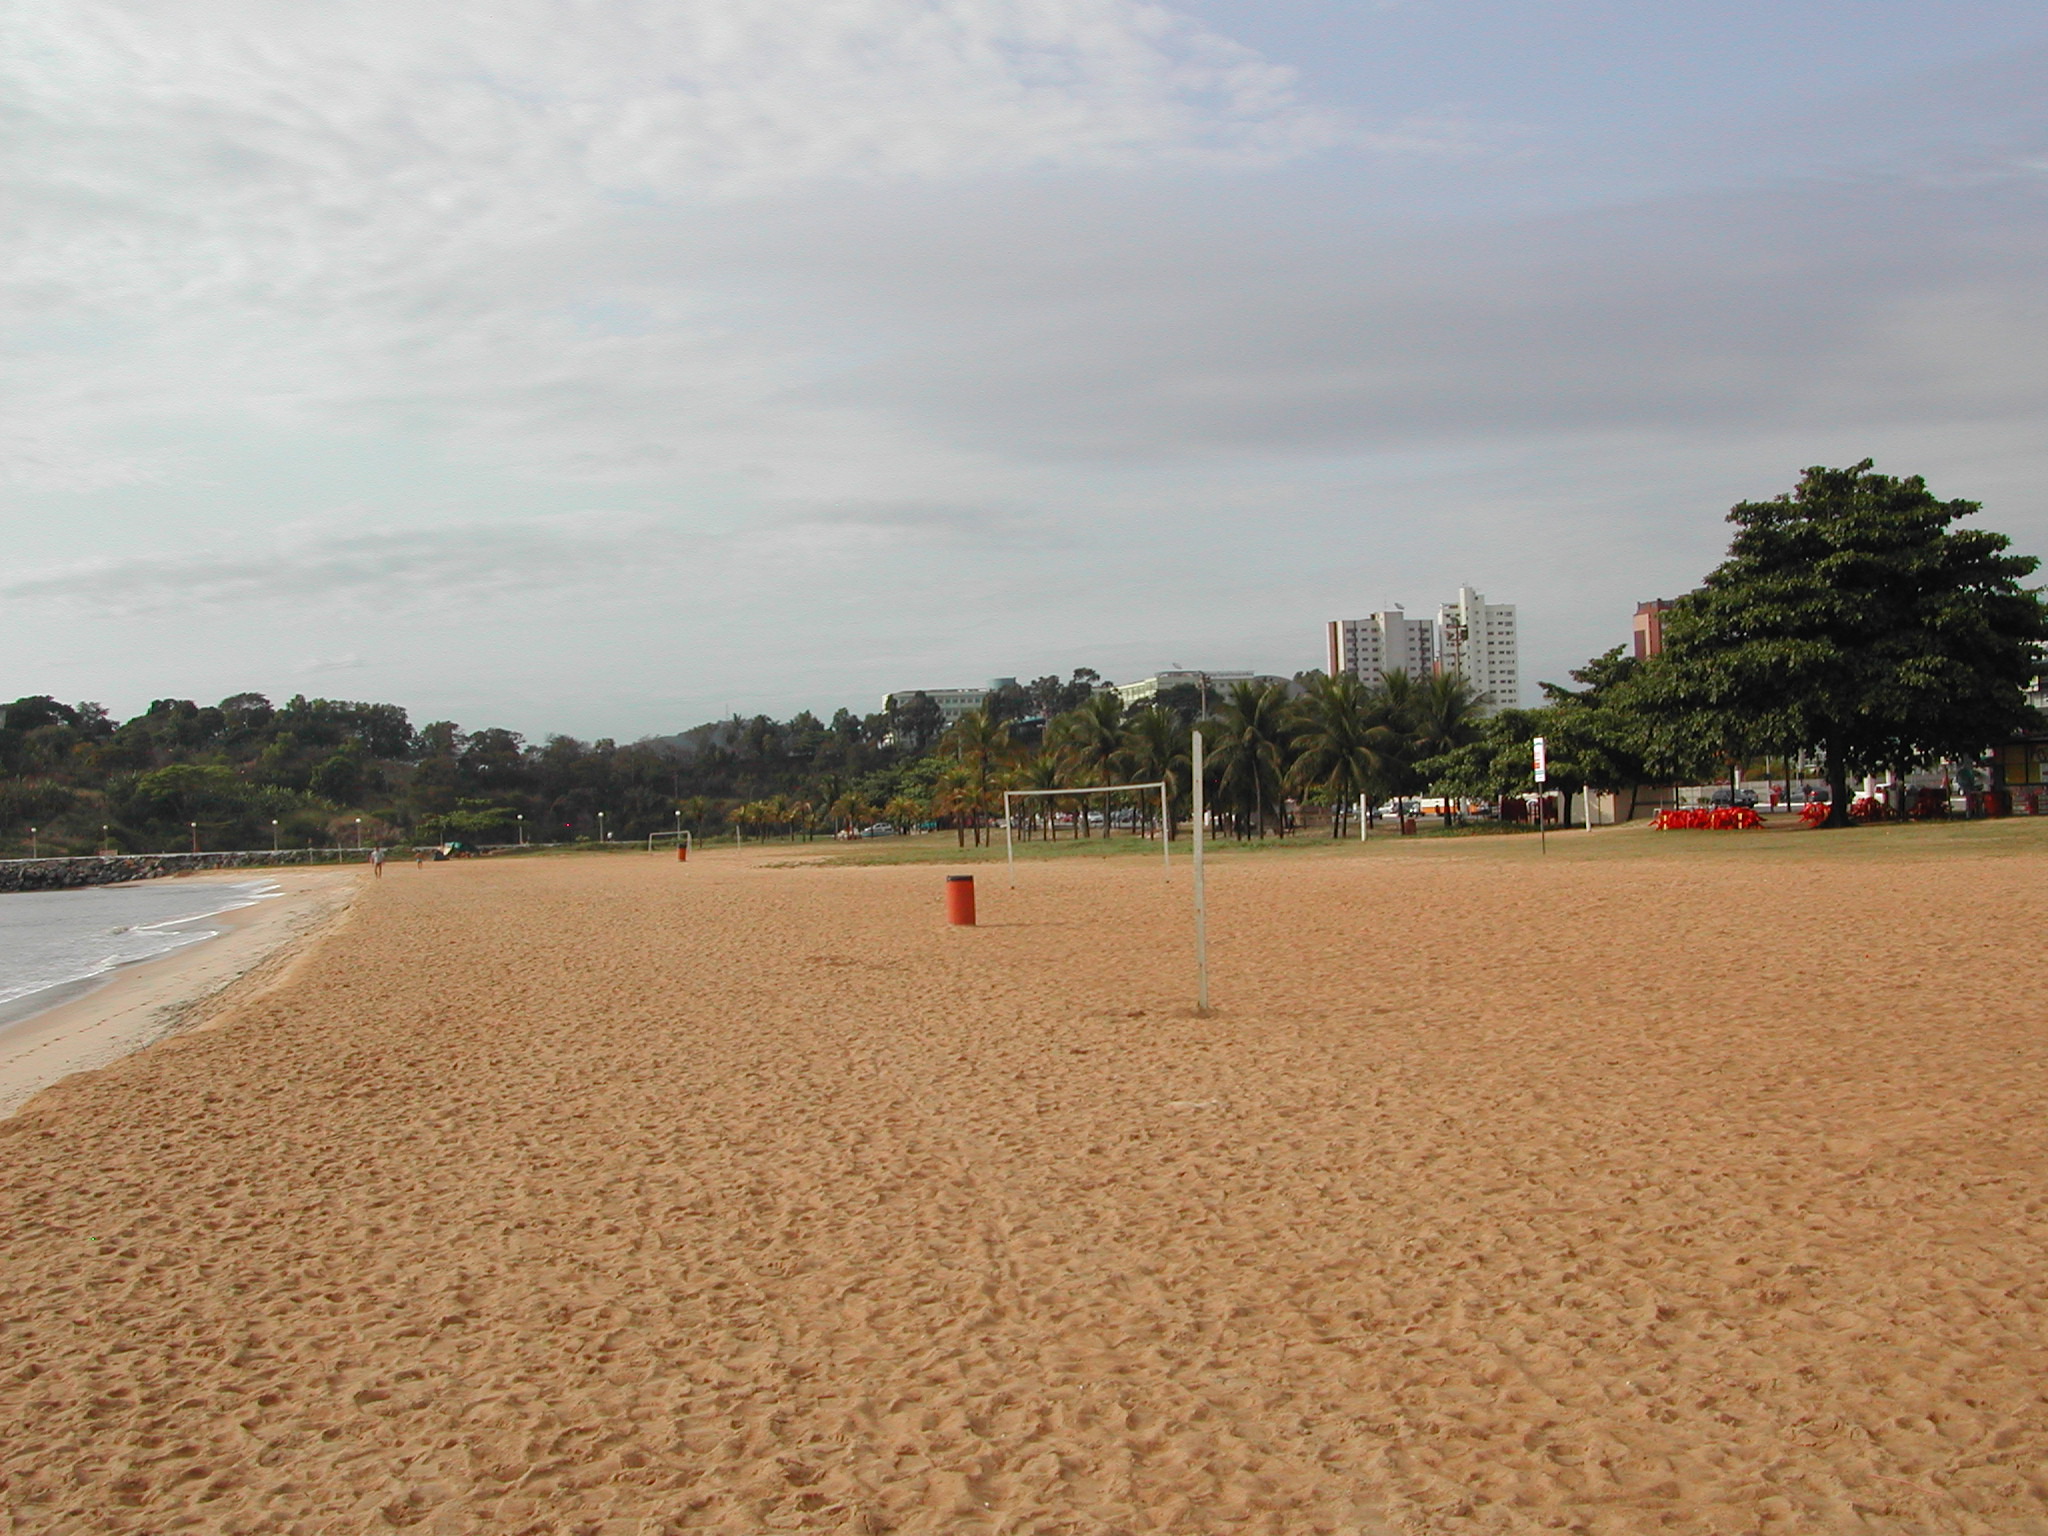 Beach volleyball, Olympic sport